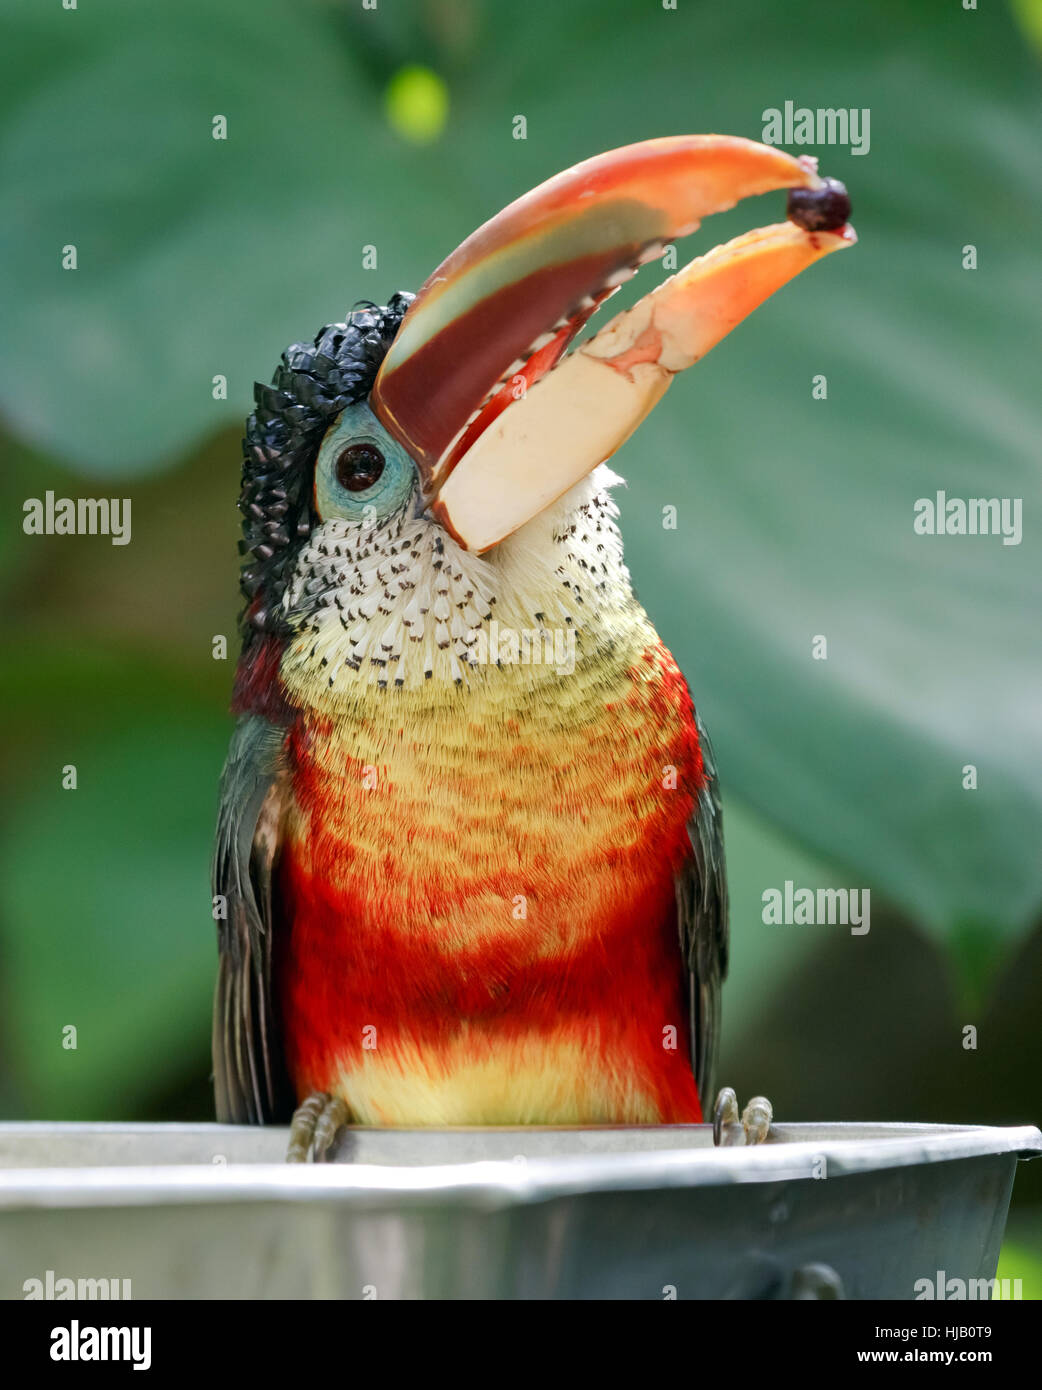 Vogel, Dschungel, tropische, Amazon, bunte, Regenwald, Regenwald, schön  Stockfotografie - Alamy